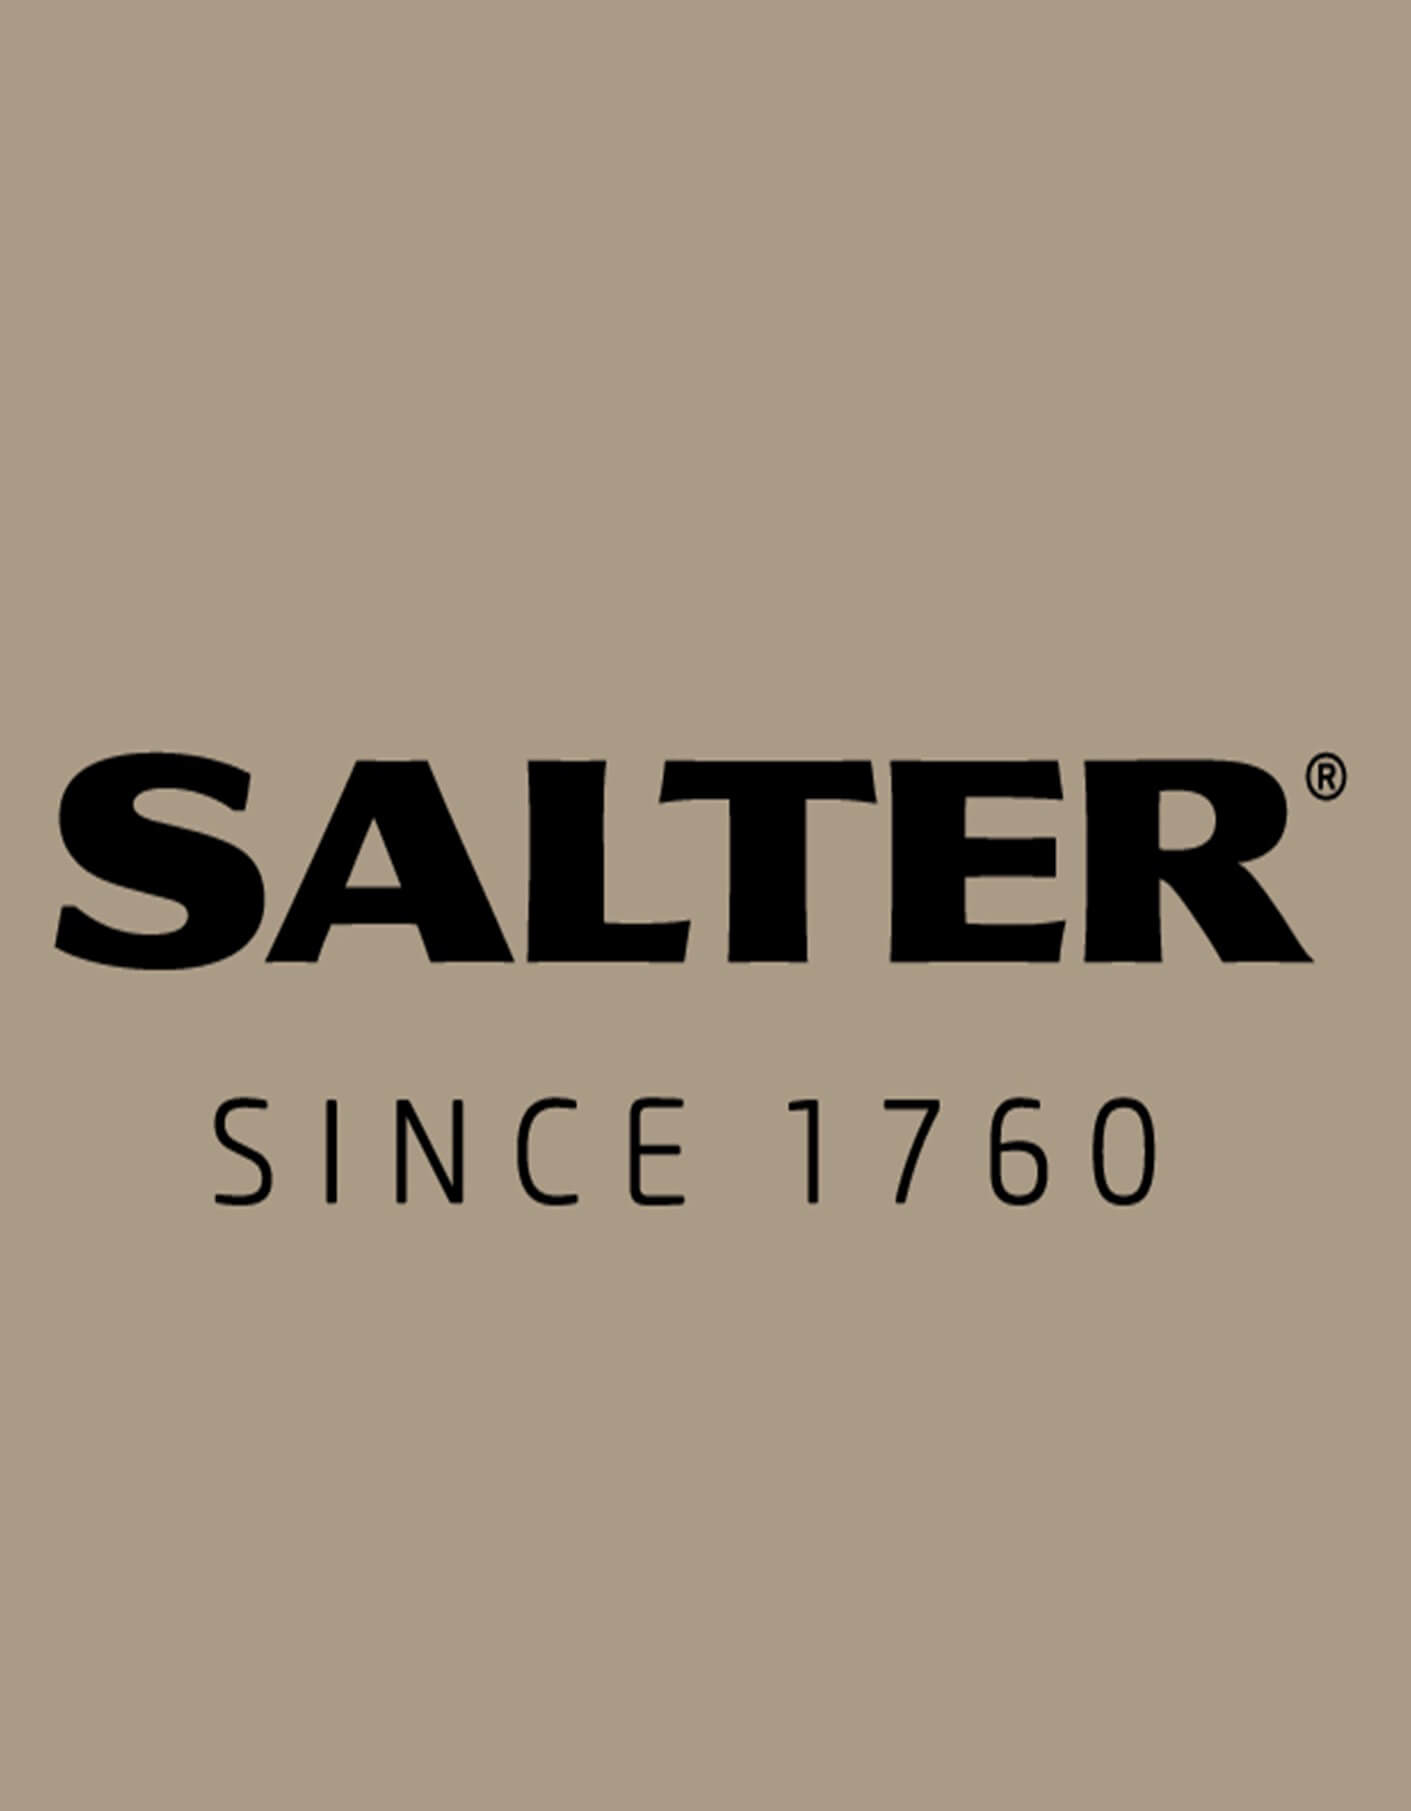 New Salter.com domain